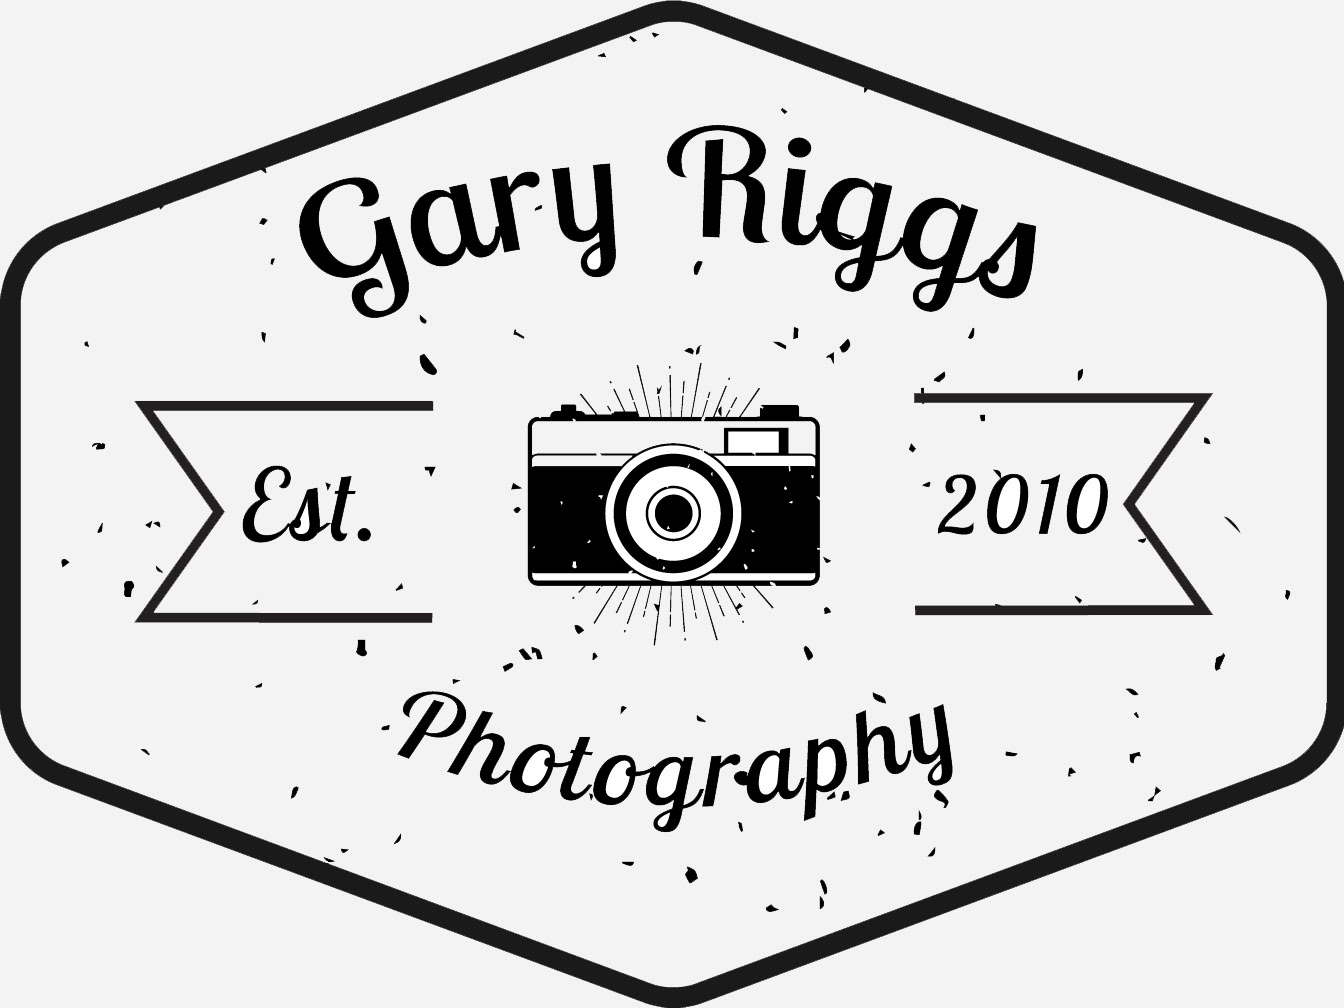 Gary Riggs